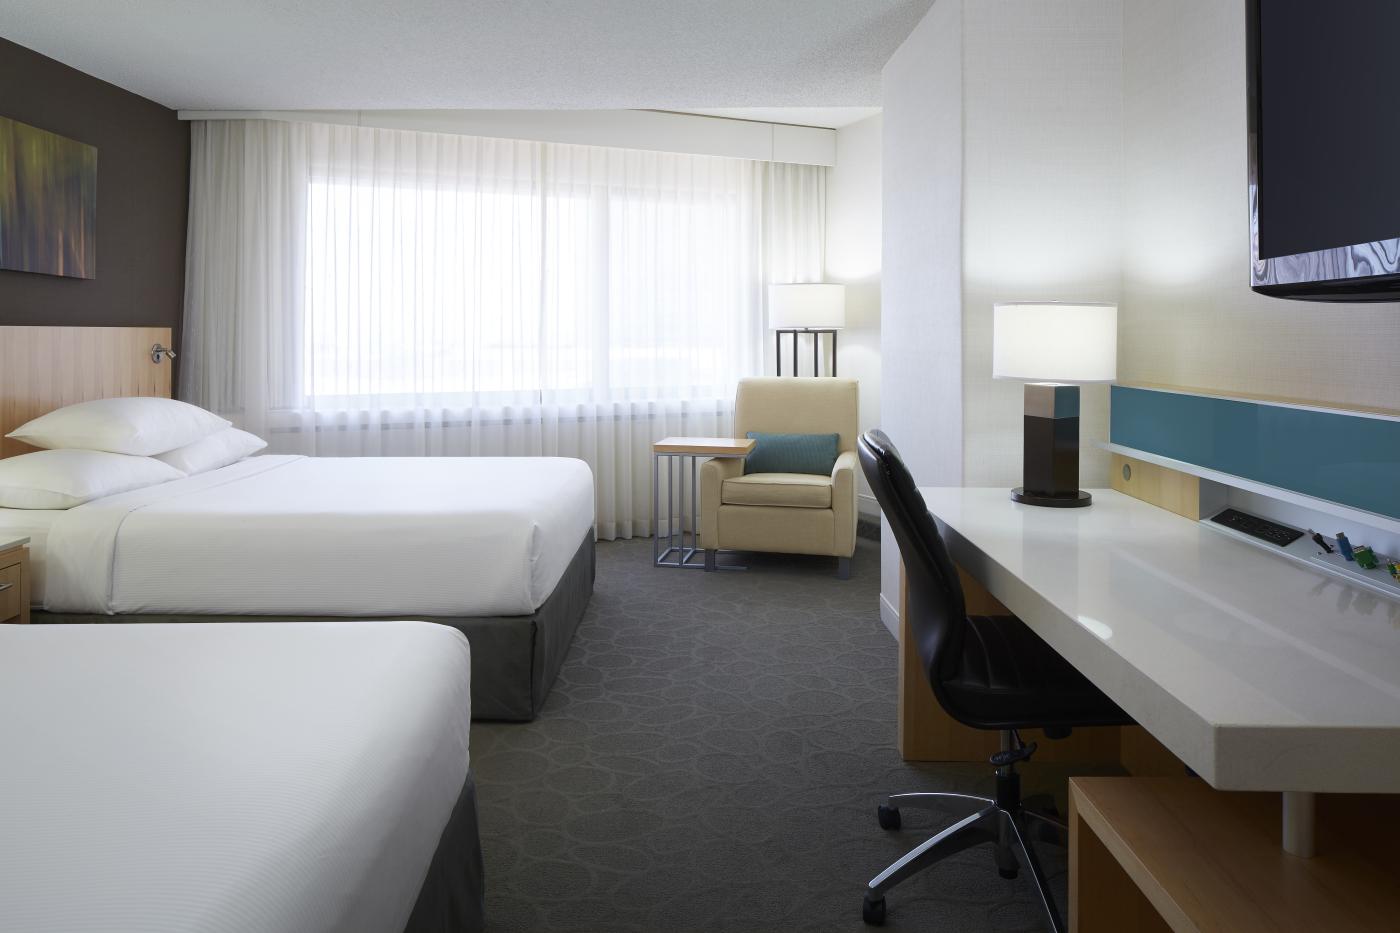 Hôtel Delta par Marriott Québec - standard room 2 beds